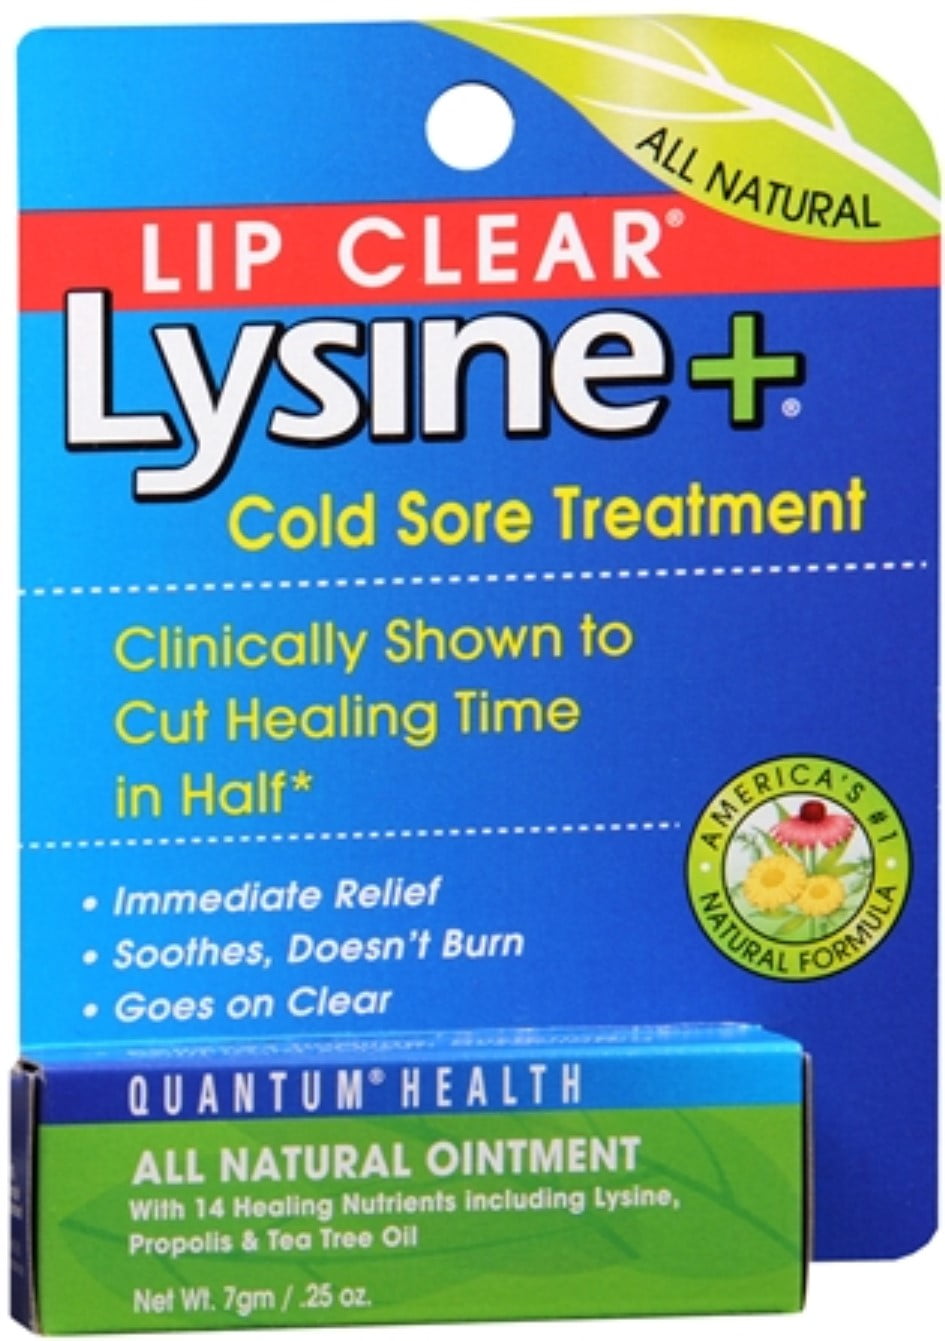 Lip sore treatment